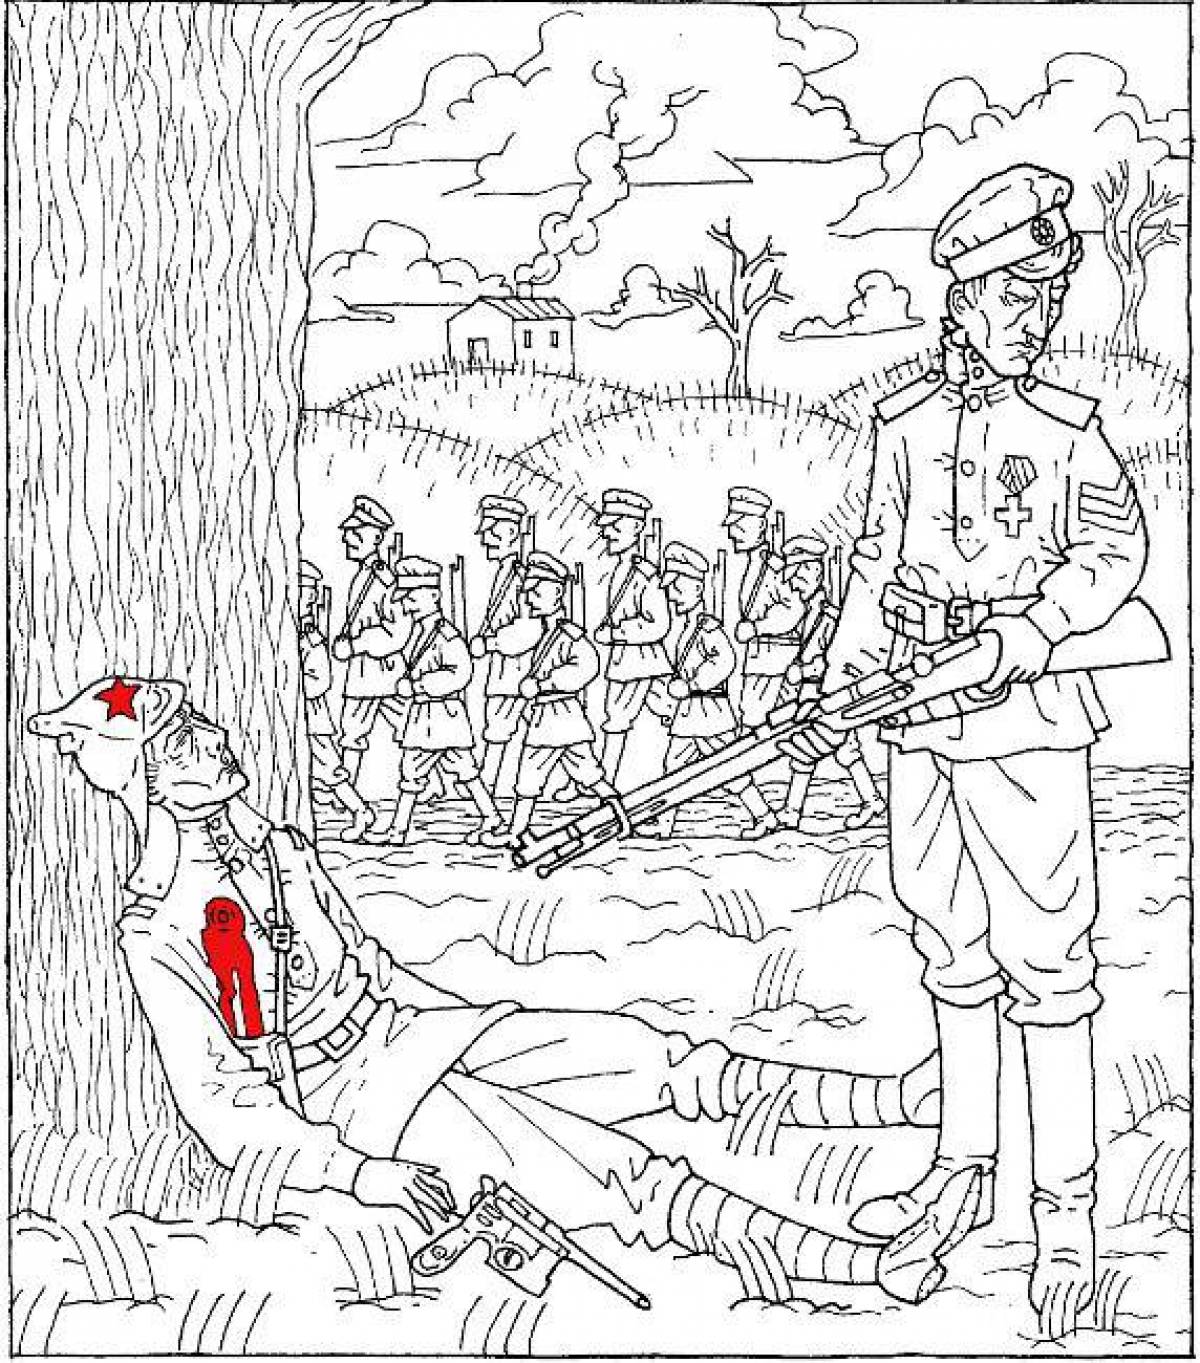 Brilliant war coloring page